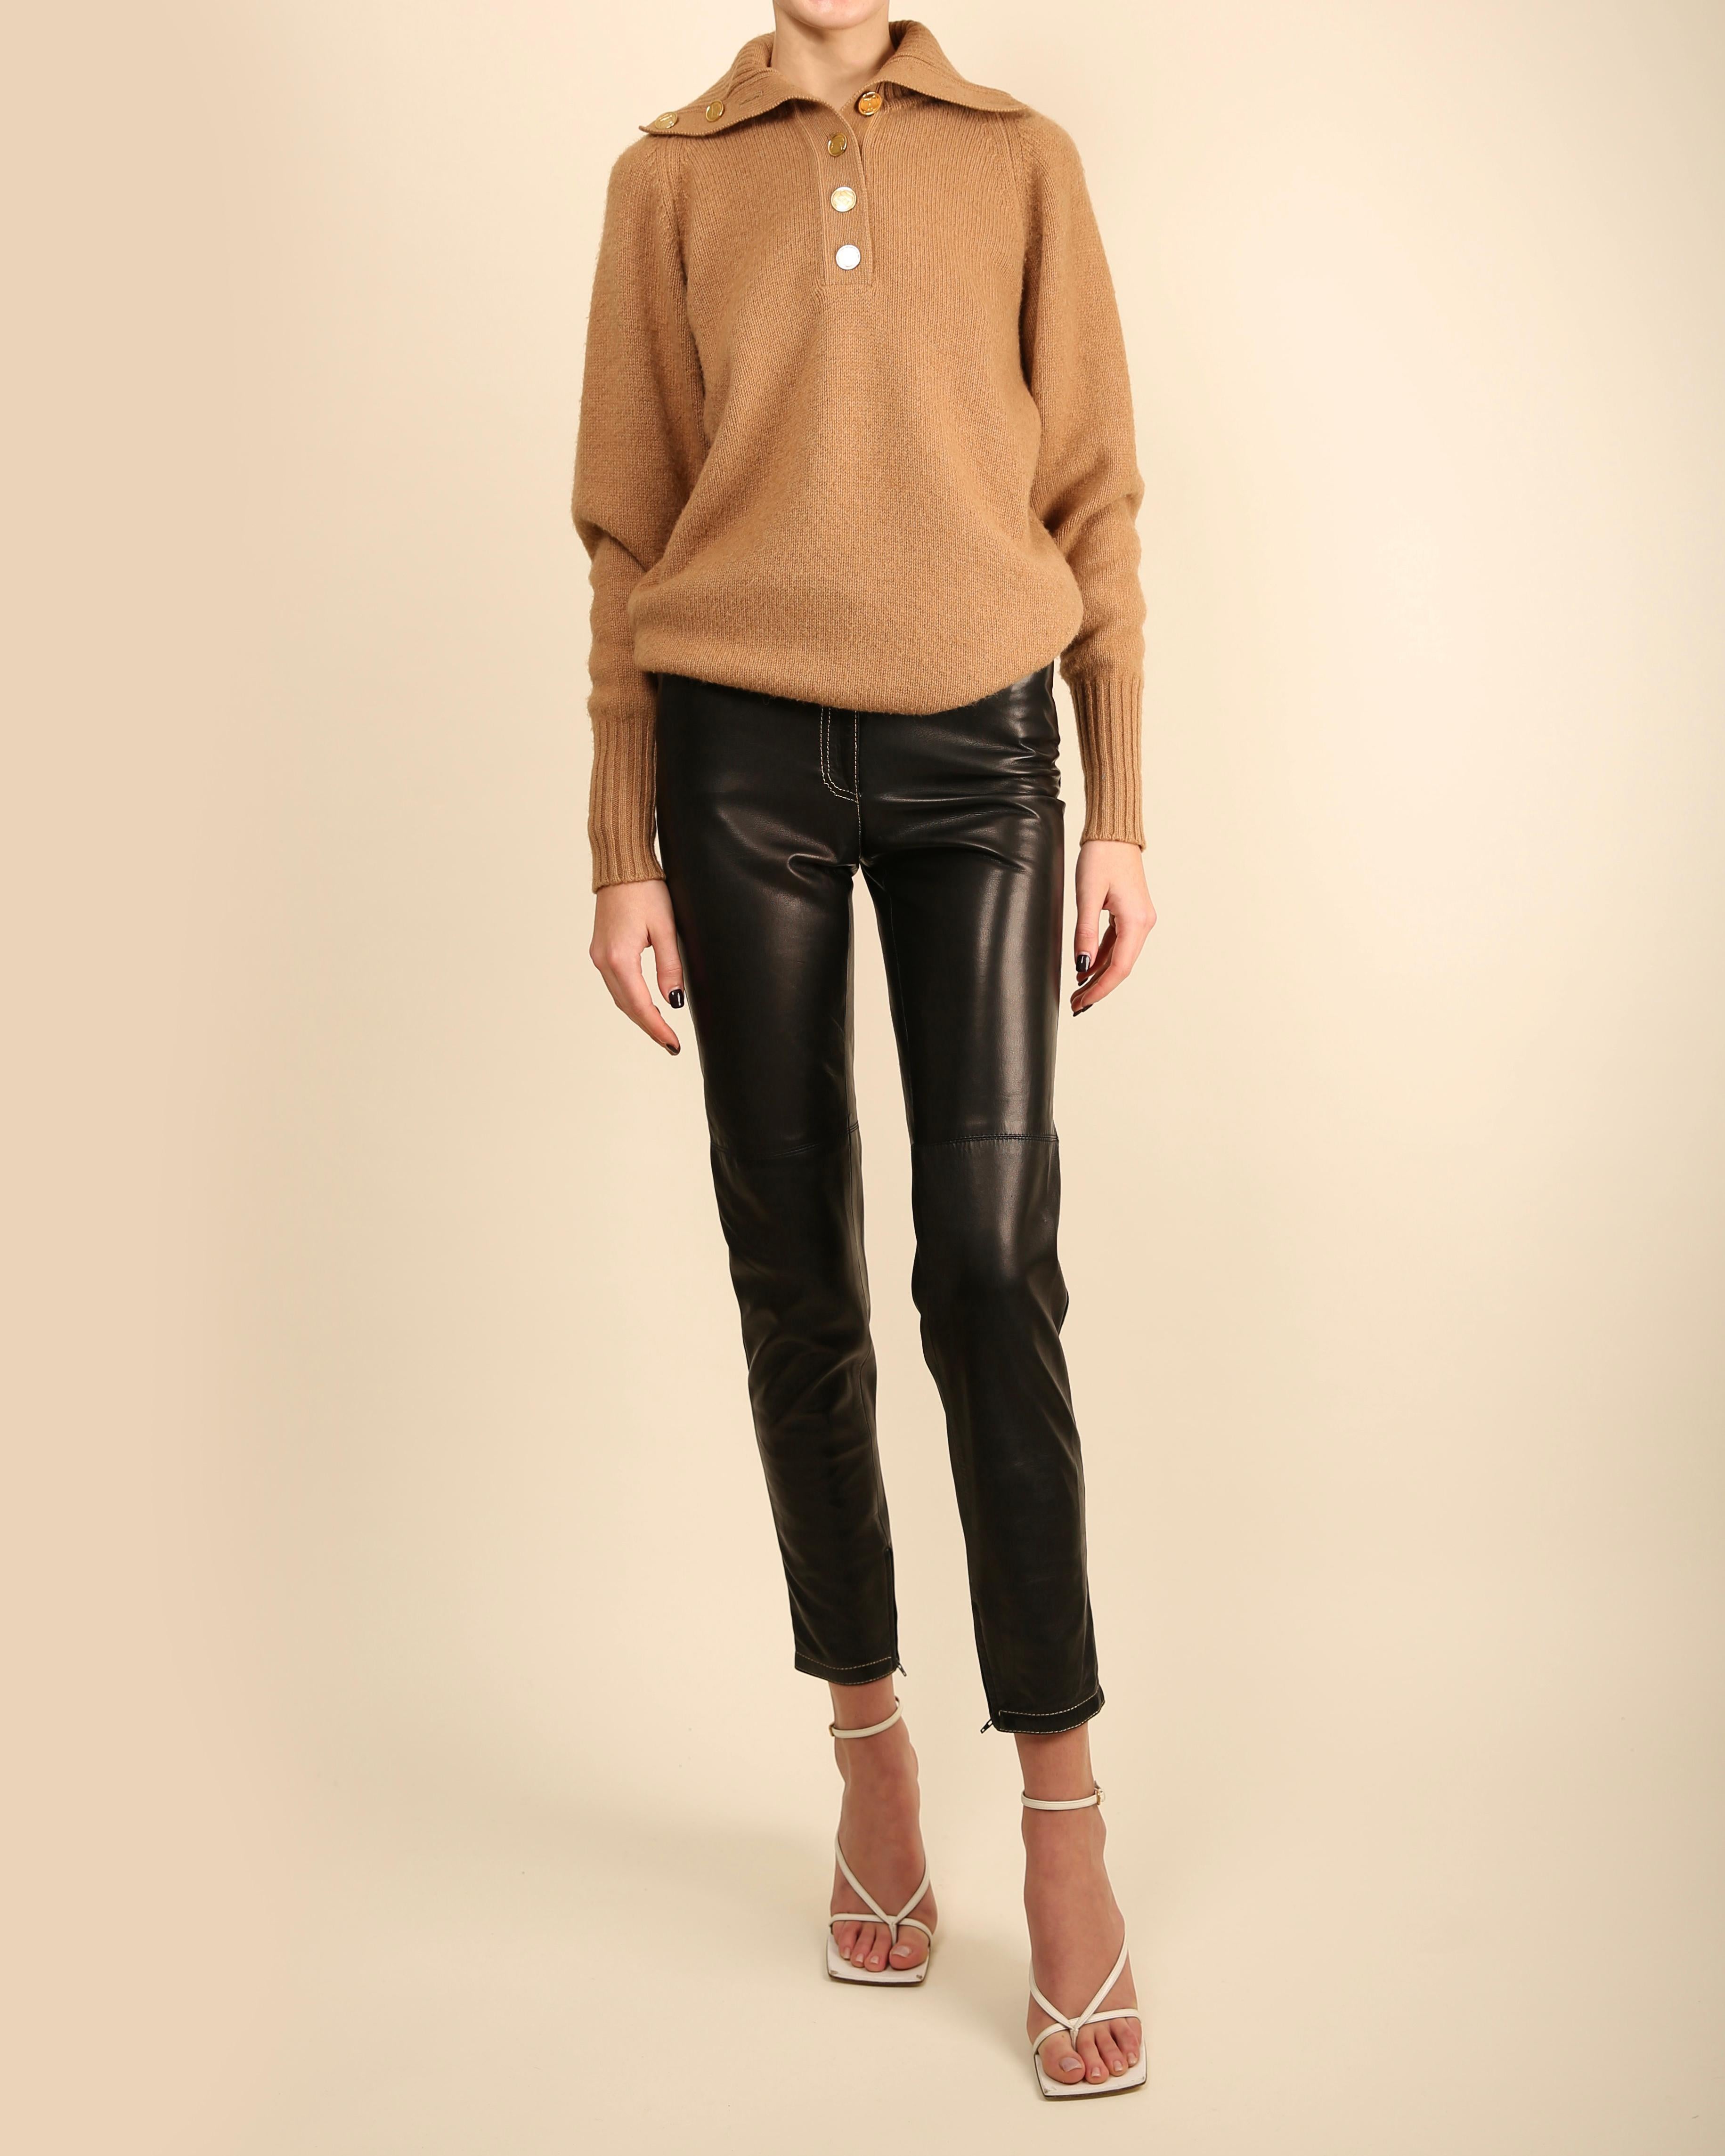 Women's Chanel vtg tan camel beige turtleneck gold logo button cashmere dress sweater  For Sale